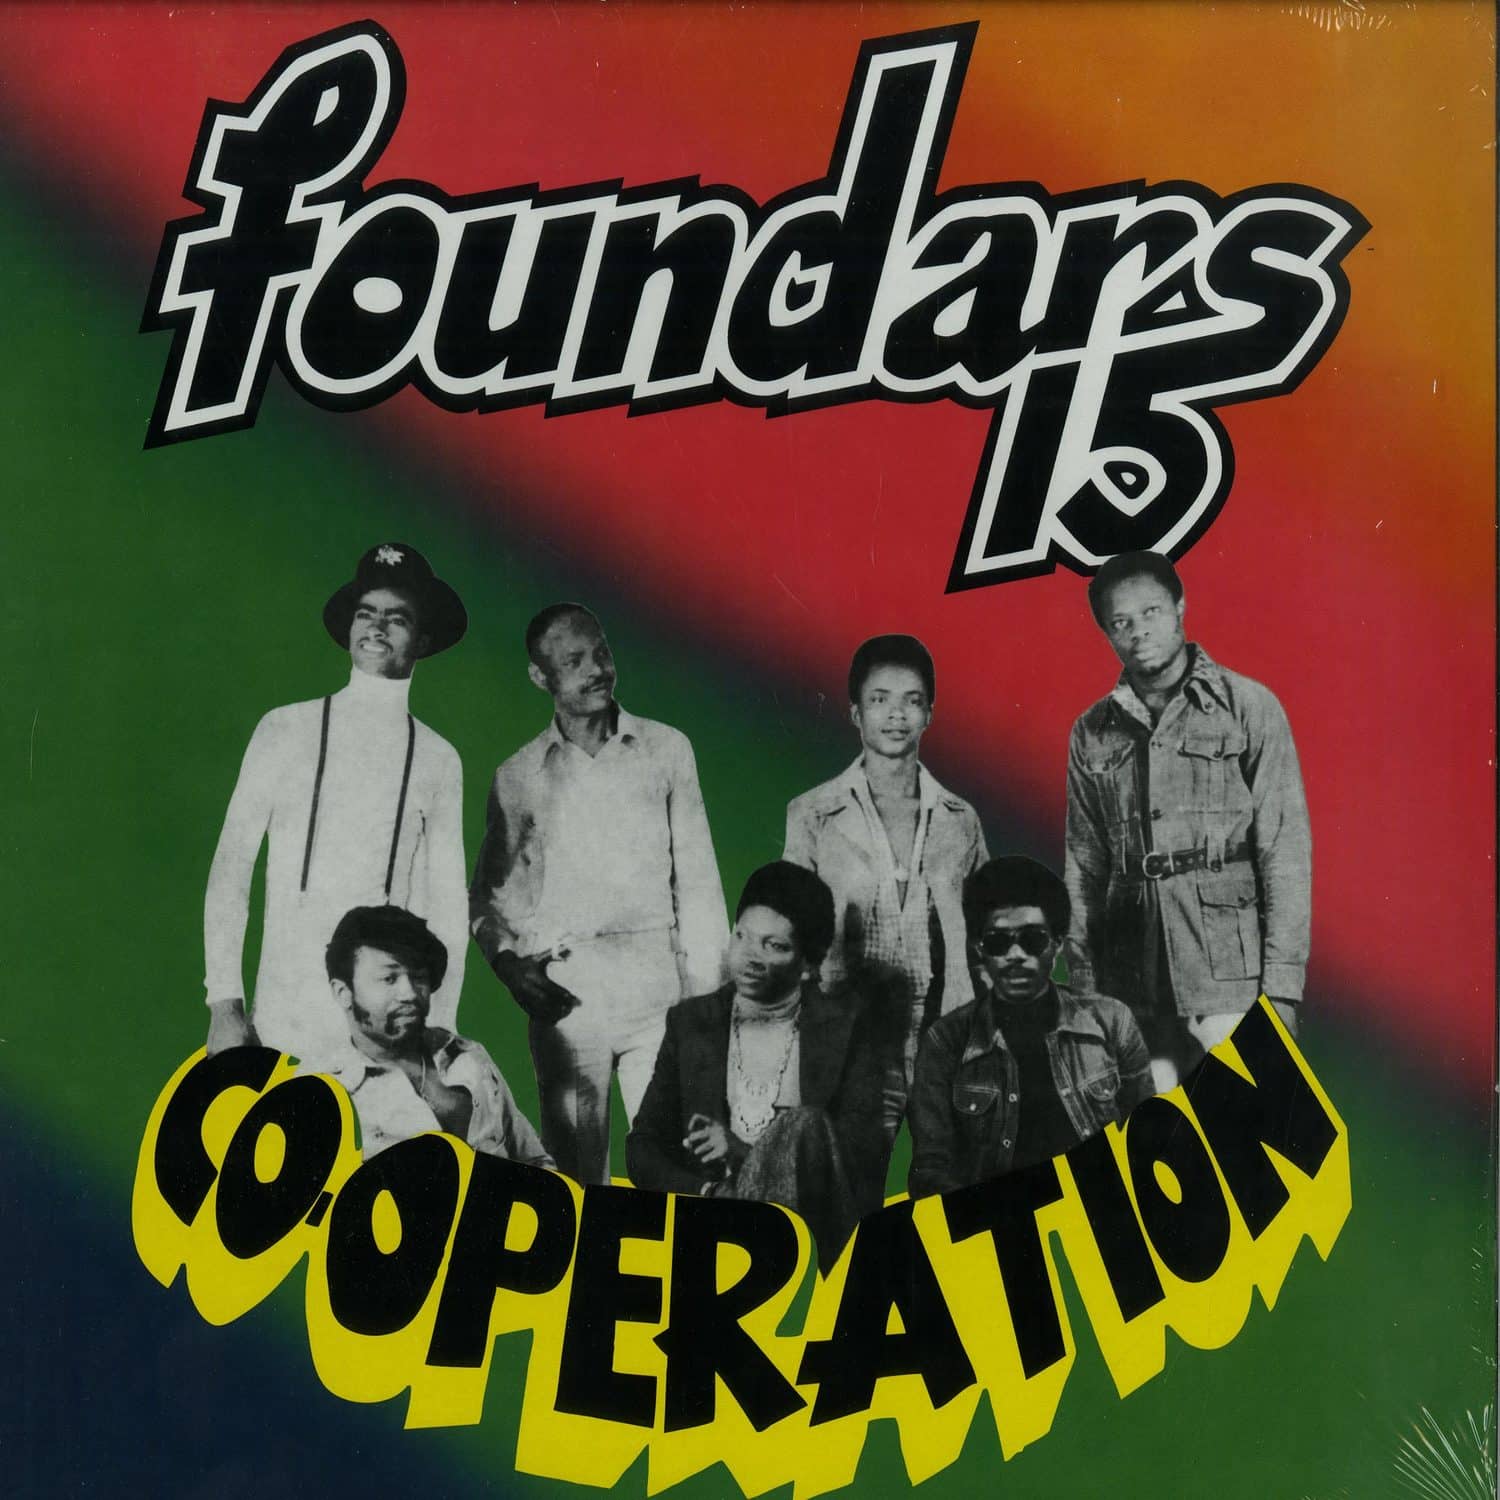 Foundars 15 - CO-OPERATION 